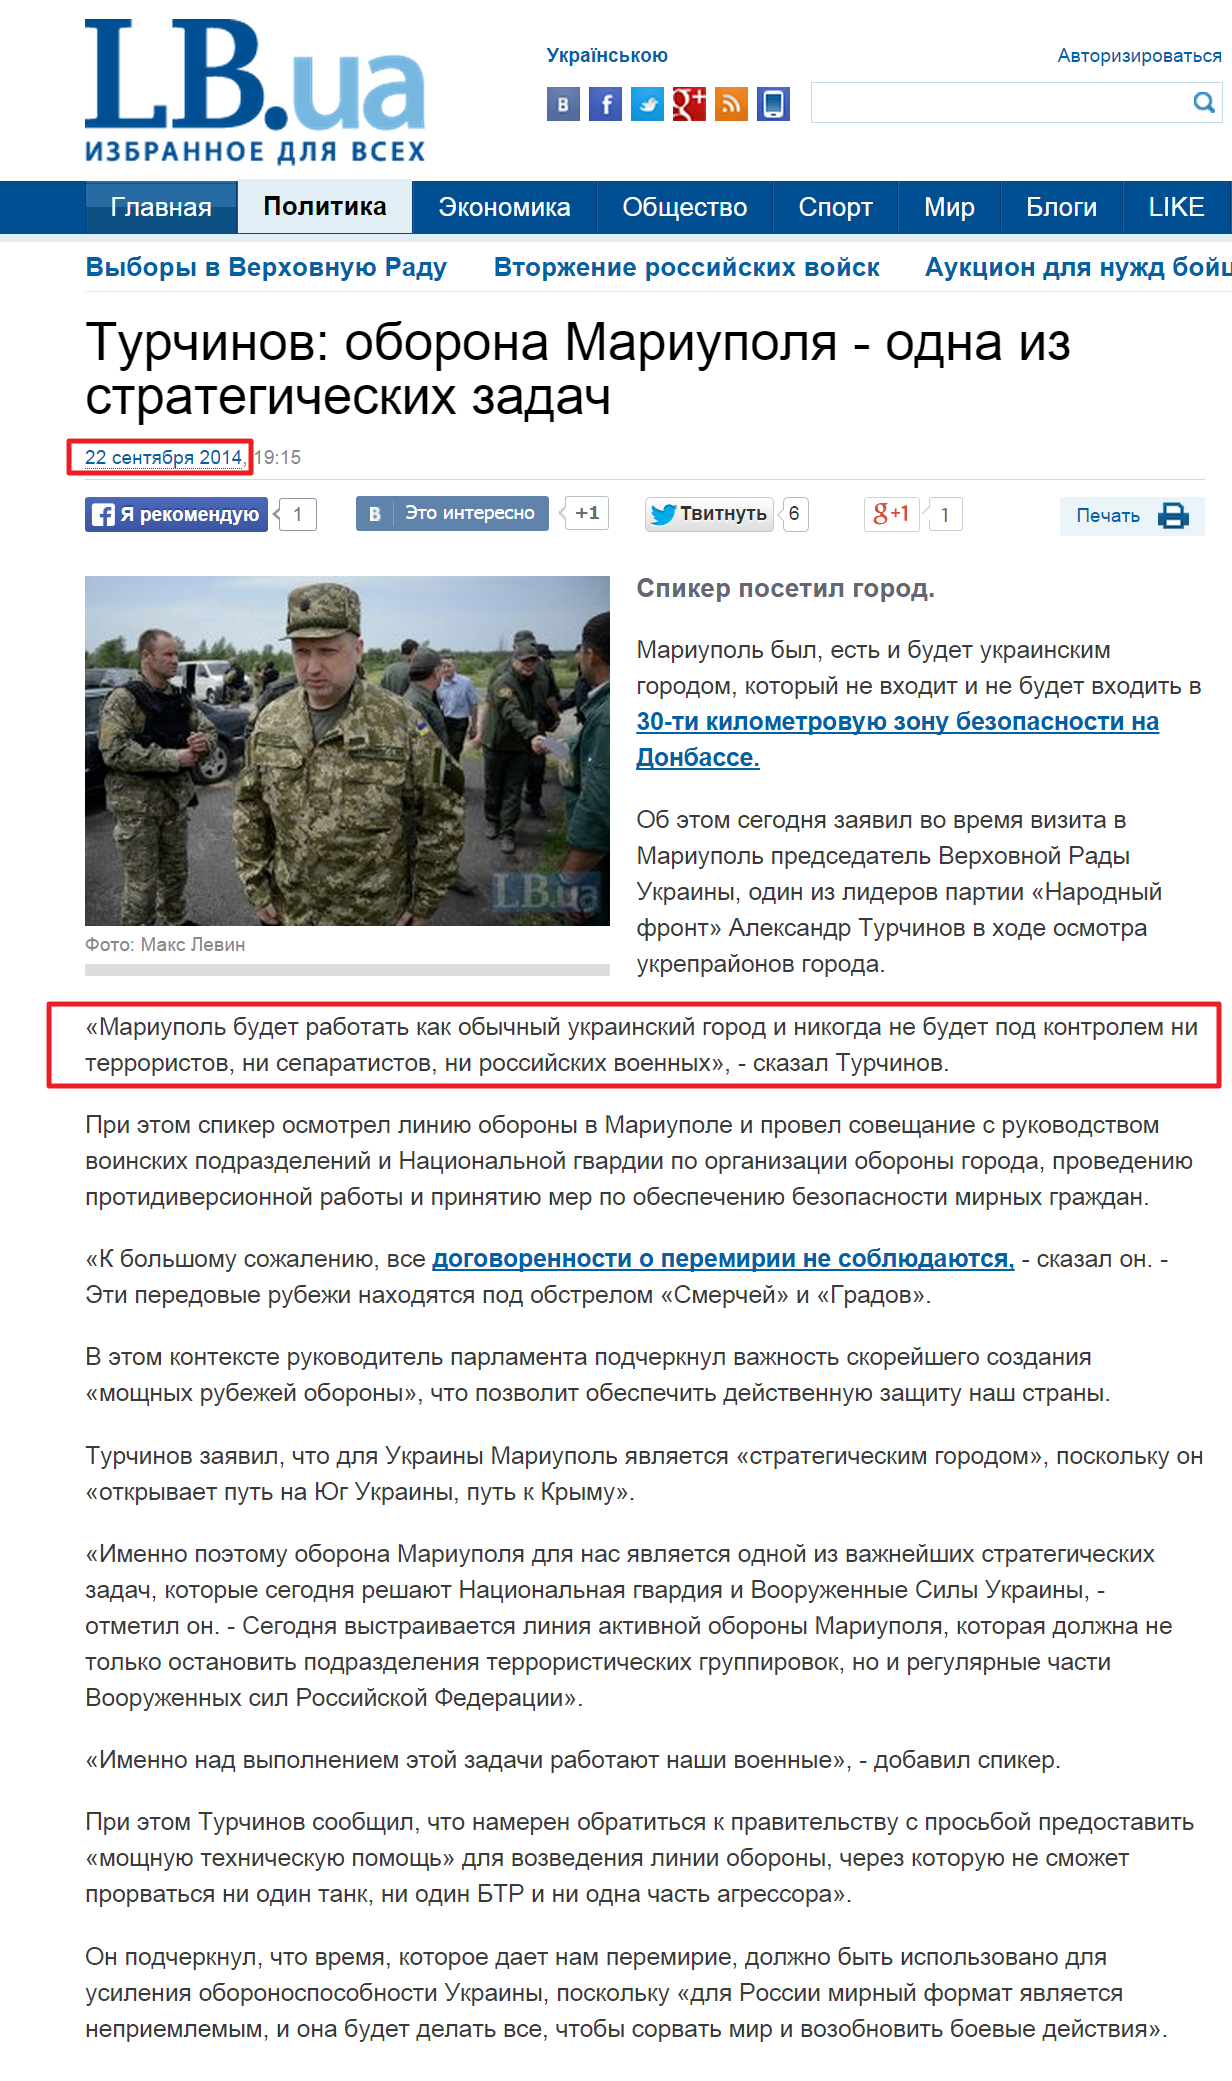 http://lb.ua/news/2014/09/22/280207_turchinov_oborona_mariupolya_.html